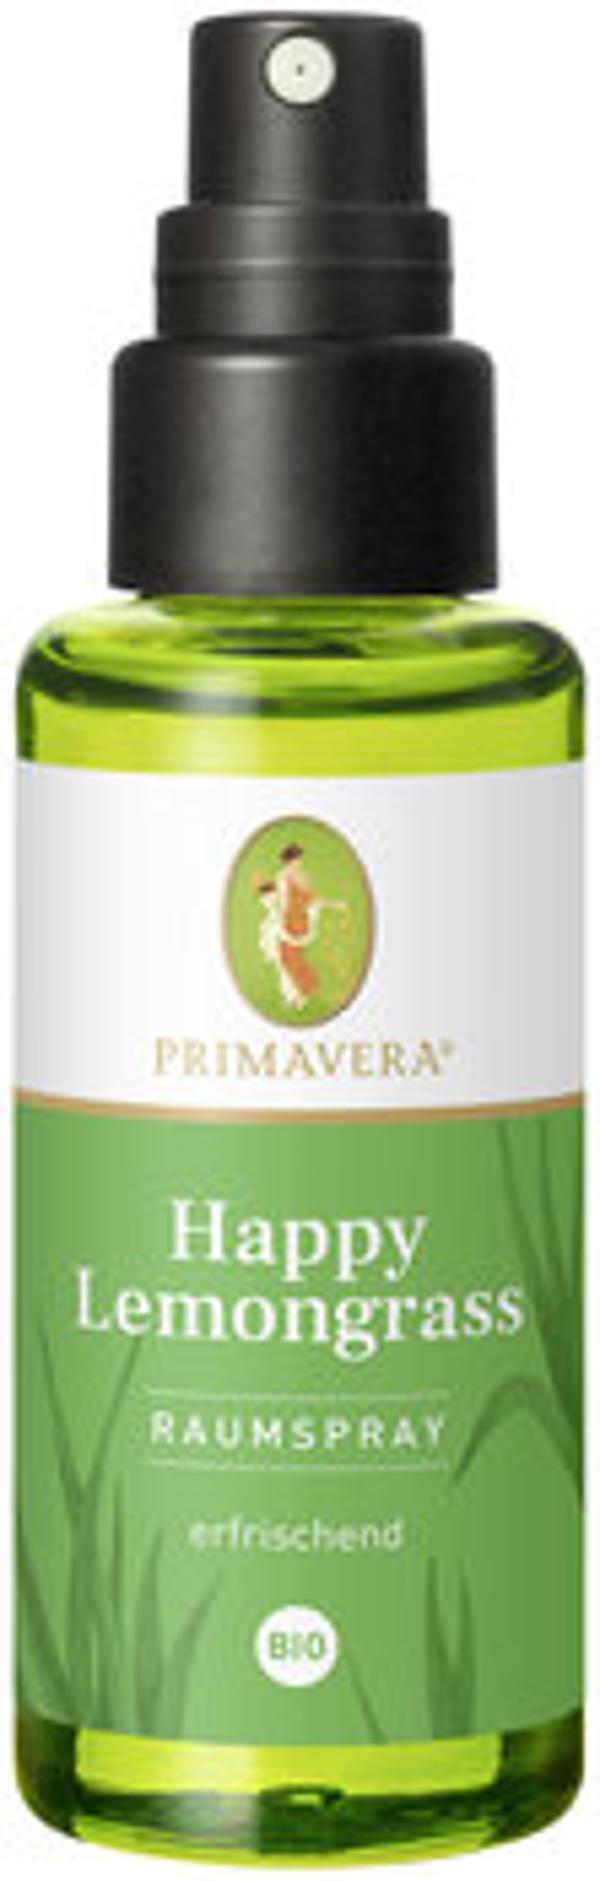 Produktfoto zu Happy Lemongrass Raumspray 50ml